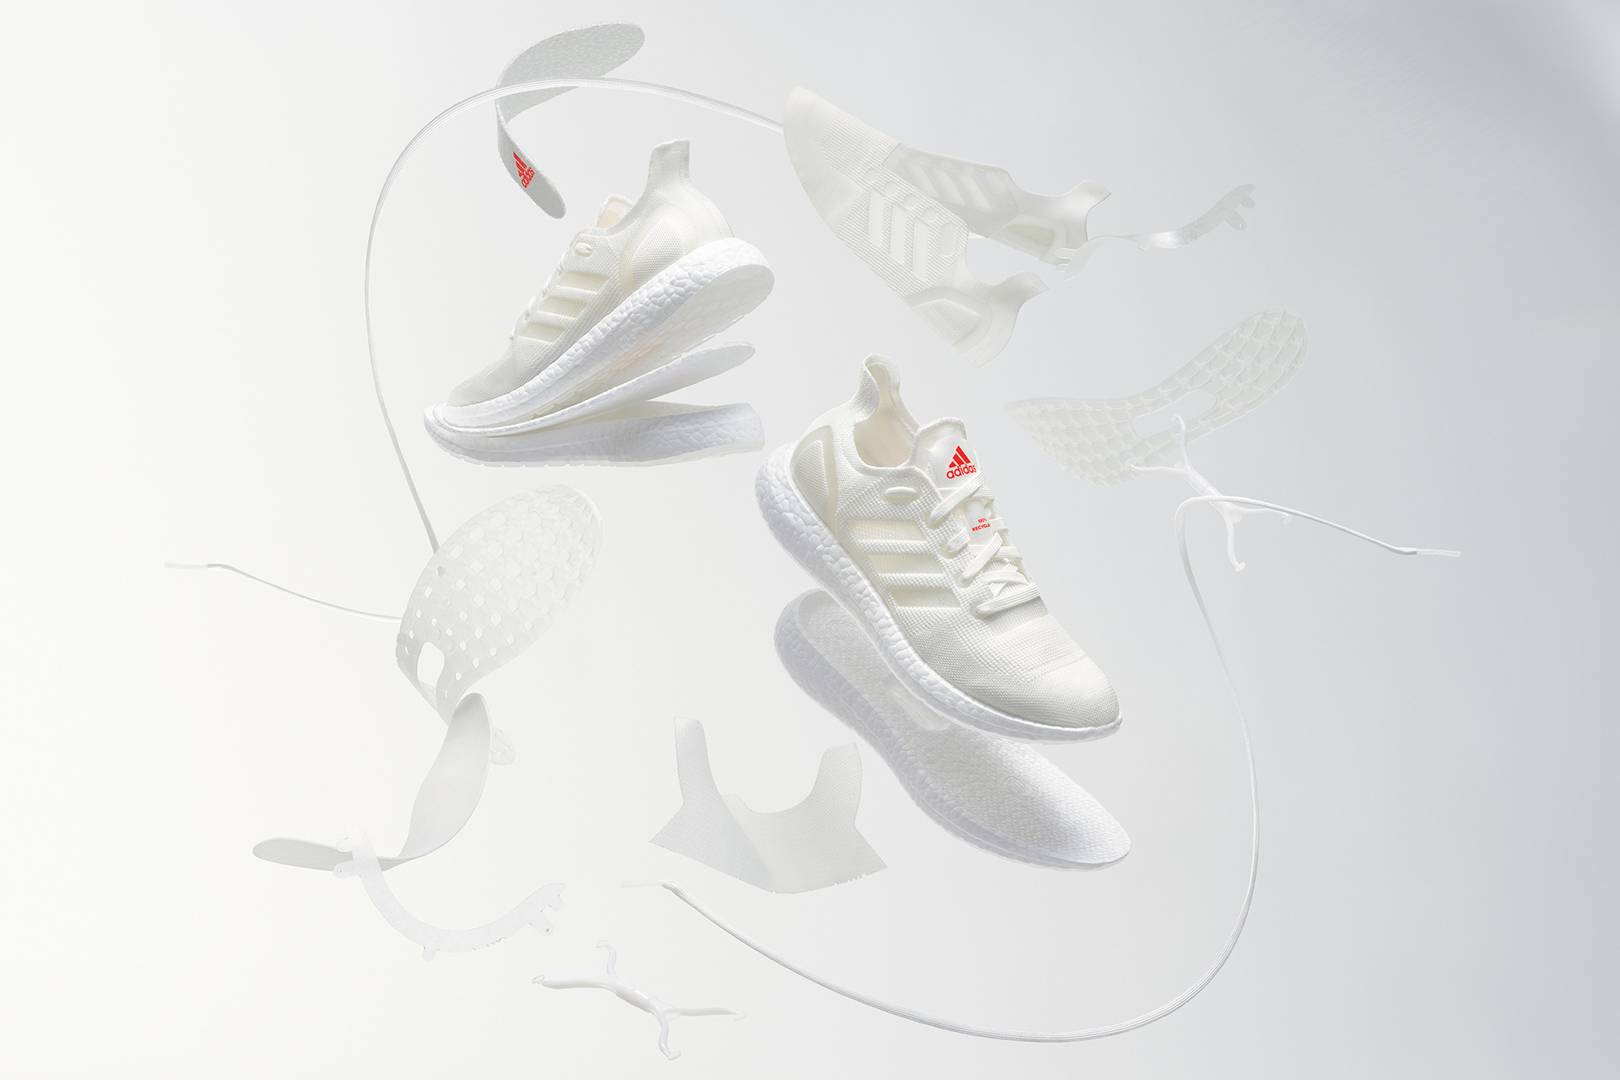 Futurecraft.Loop: New adidas shoe uses 